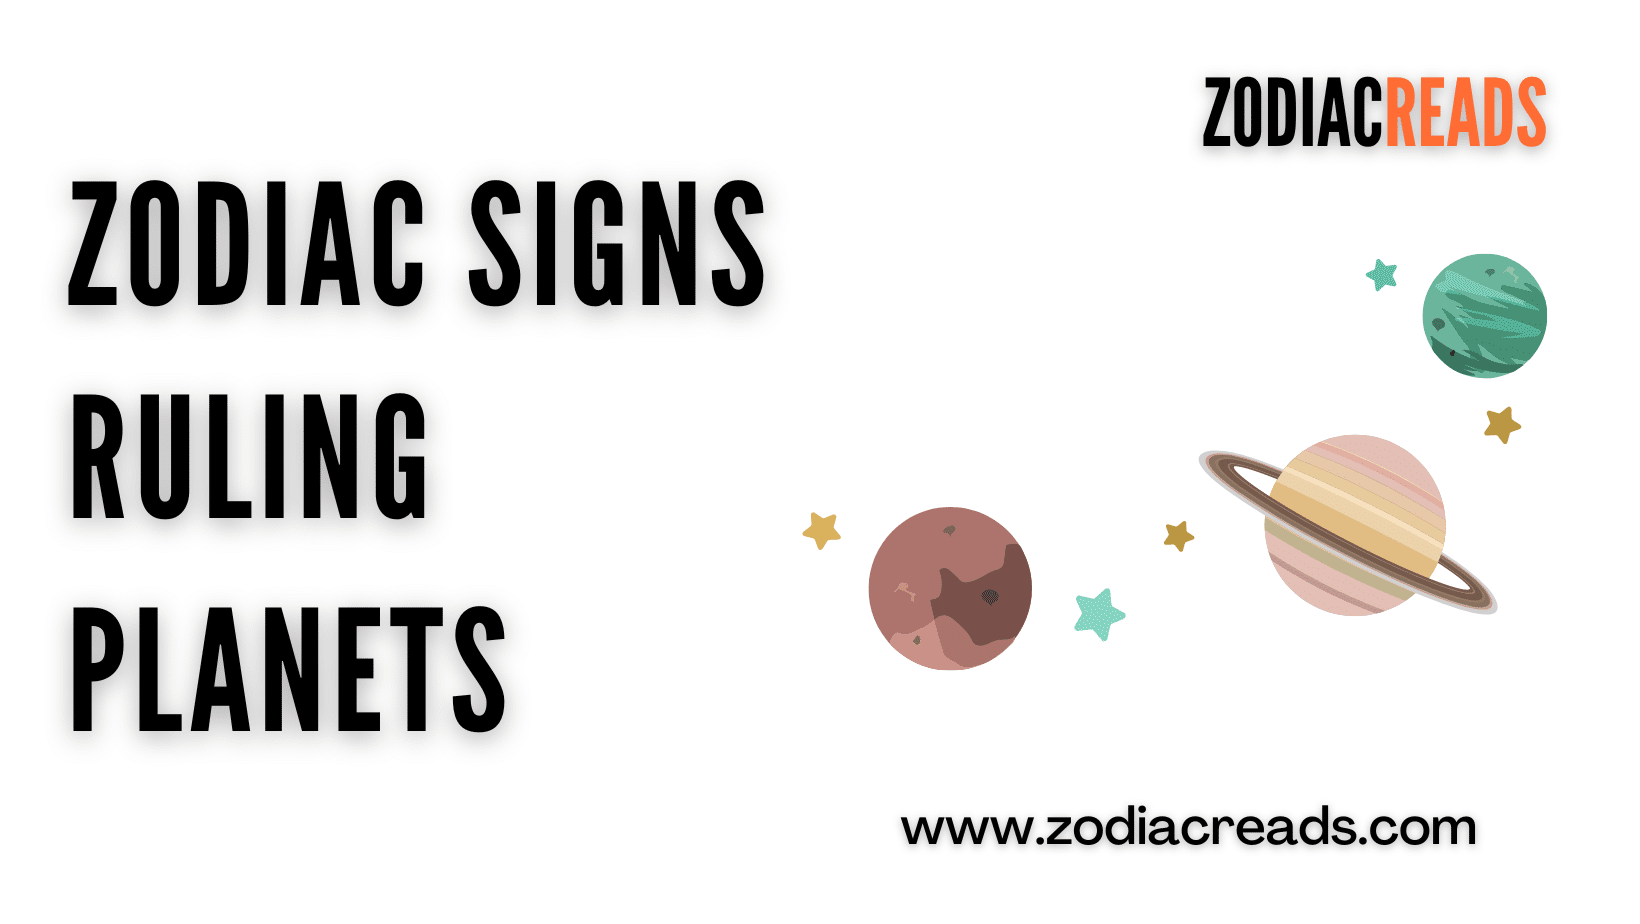 Zodiac Signs Ruling Planets Zodiacreads